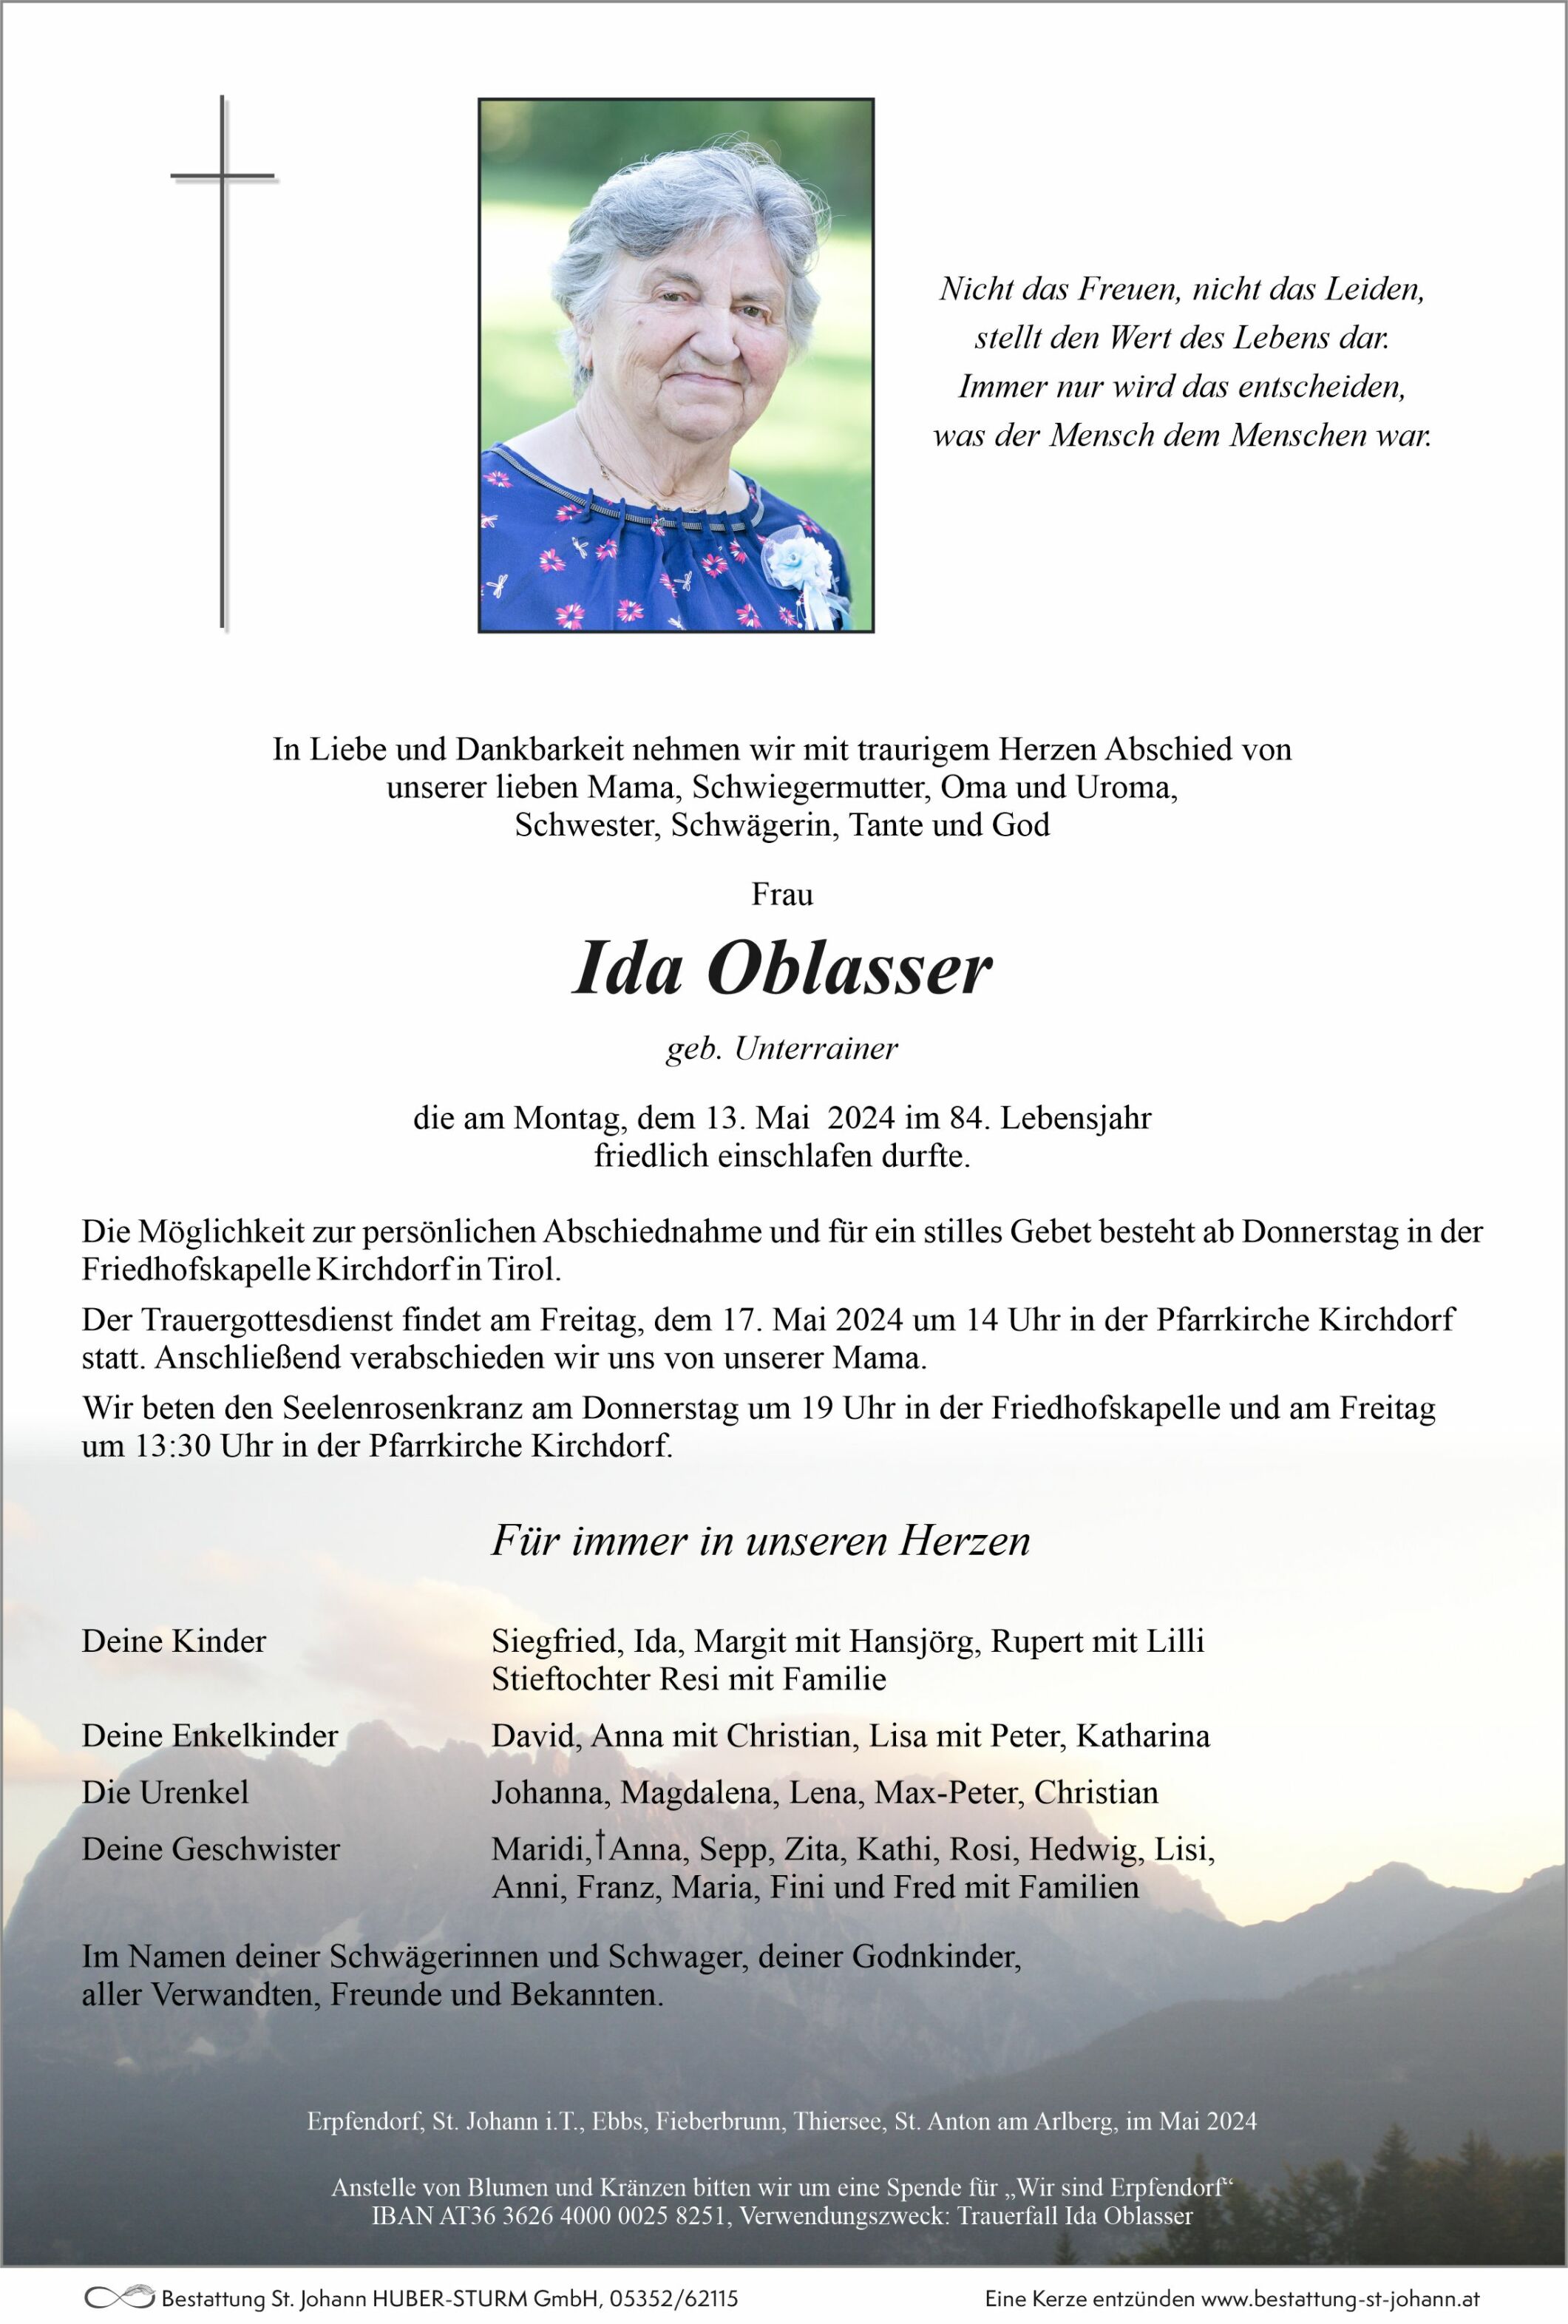 Ida Oblasser